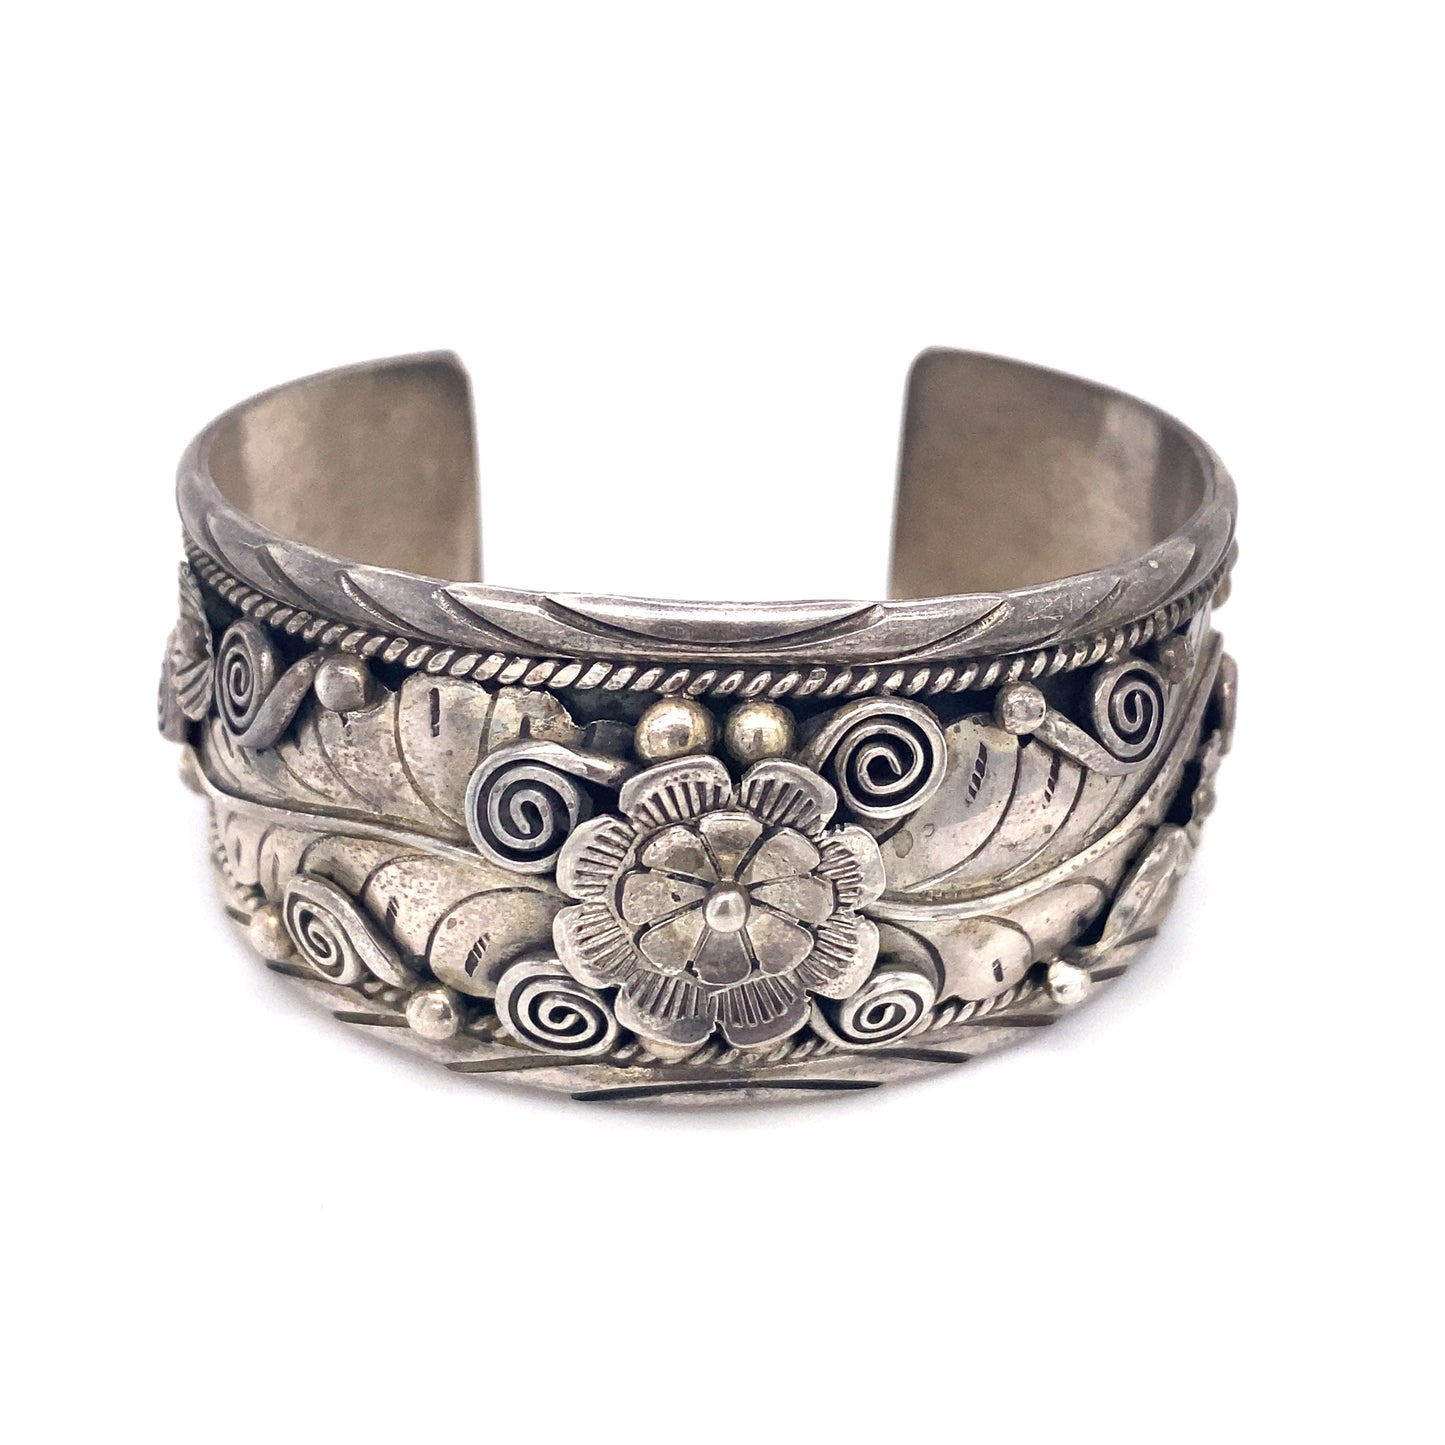 Circa 1970s Flower Design Cuff Bracelet in Sterling Silver Marked Parlos